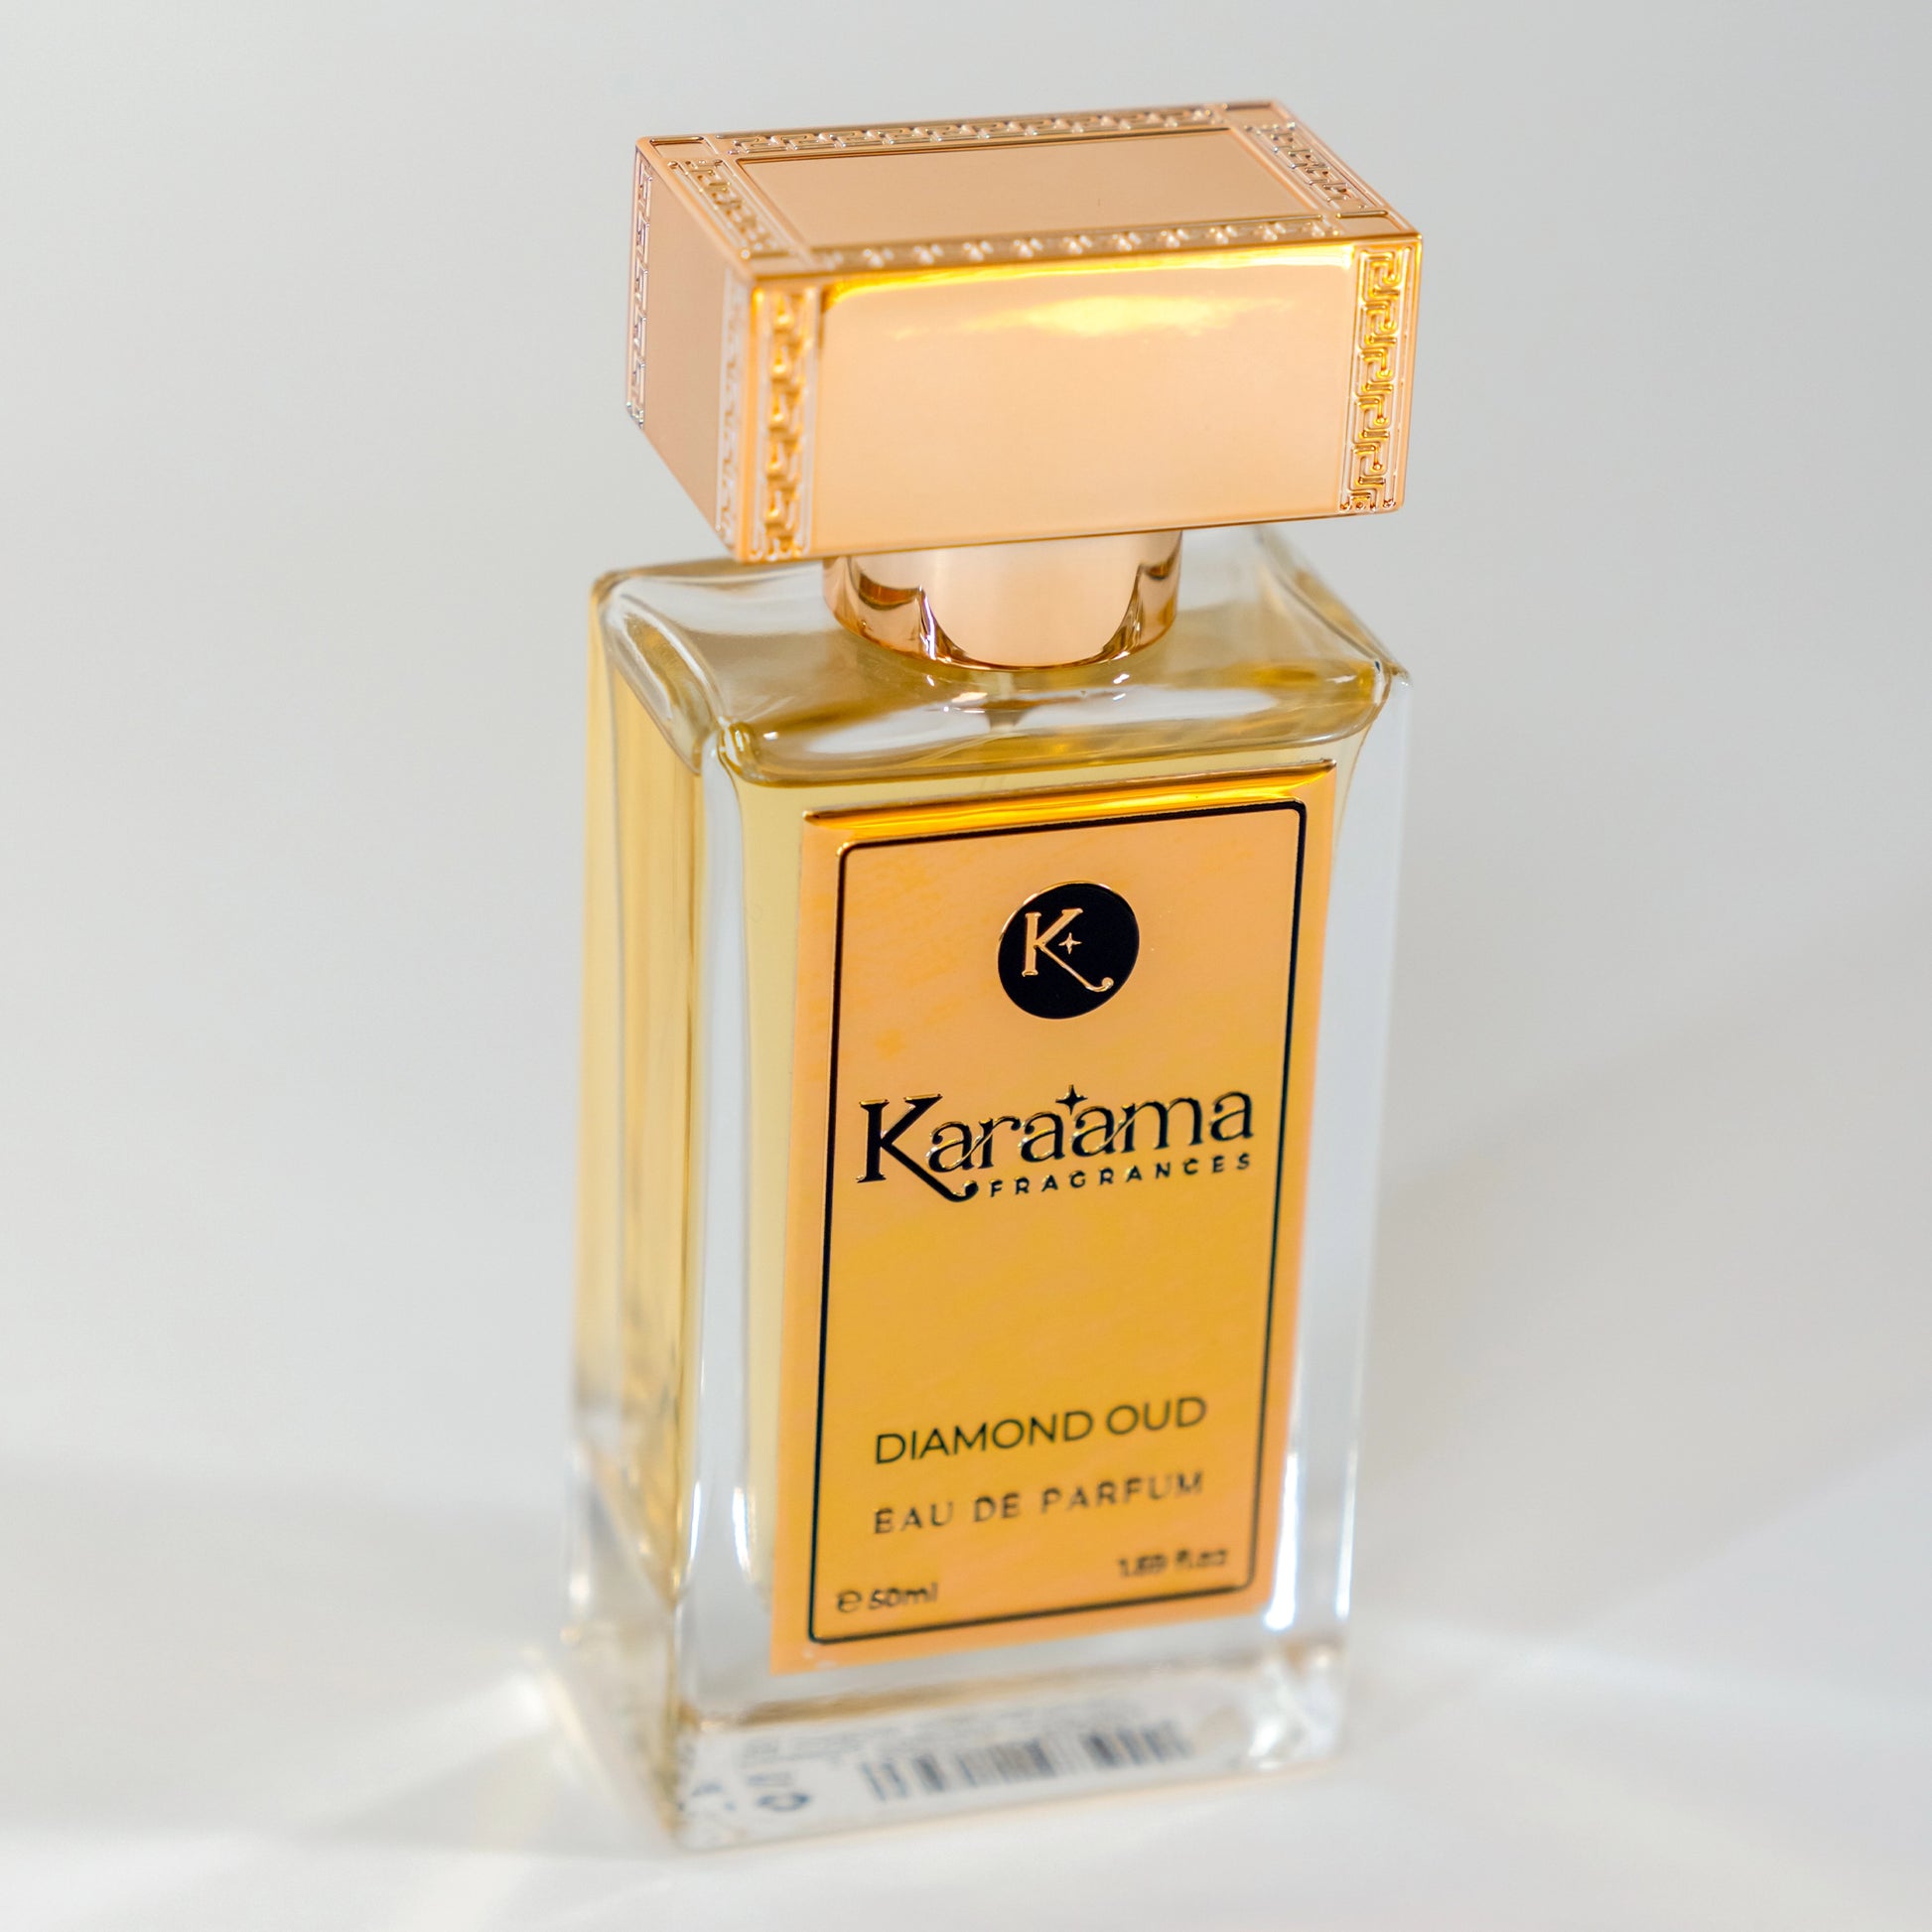 Elegant Diamond Oud Eau de Parfum by Karama Fragrances, featuring a luxurious design with a golden cap. A trending choice for scent enthusiasts.